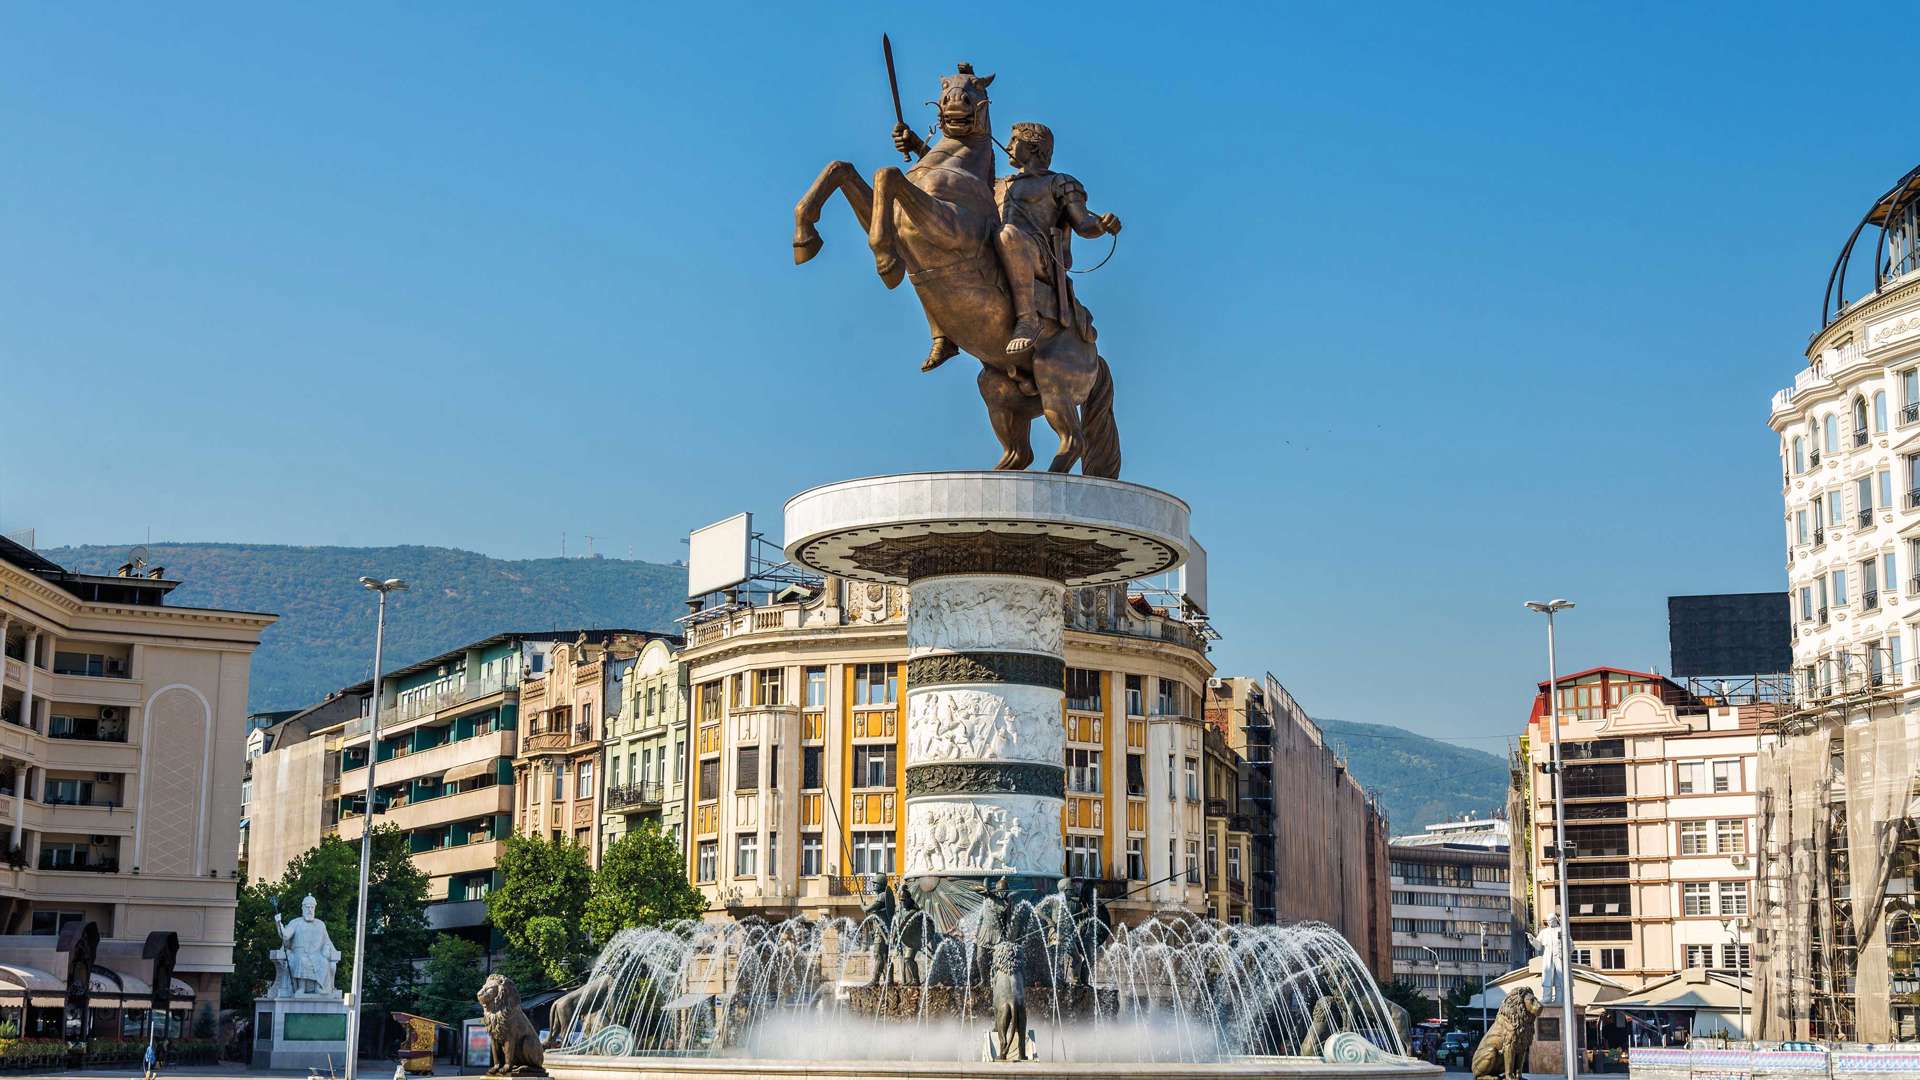 Alexander The Great Monument, Skopje, North Macedonia